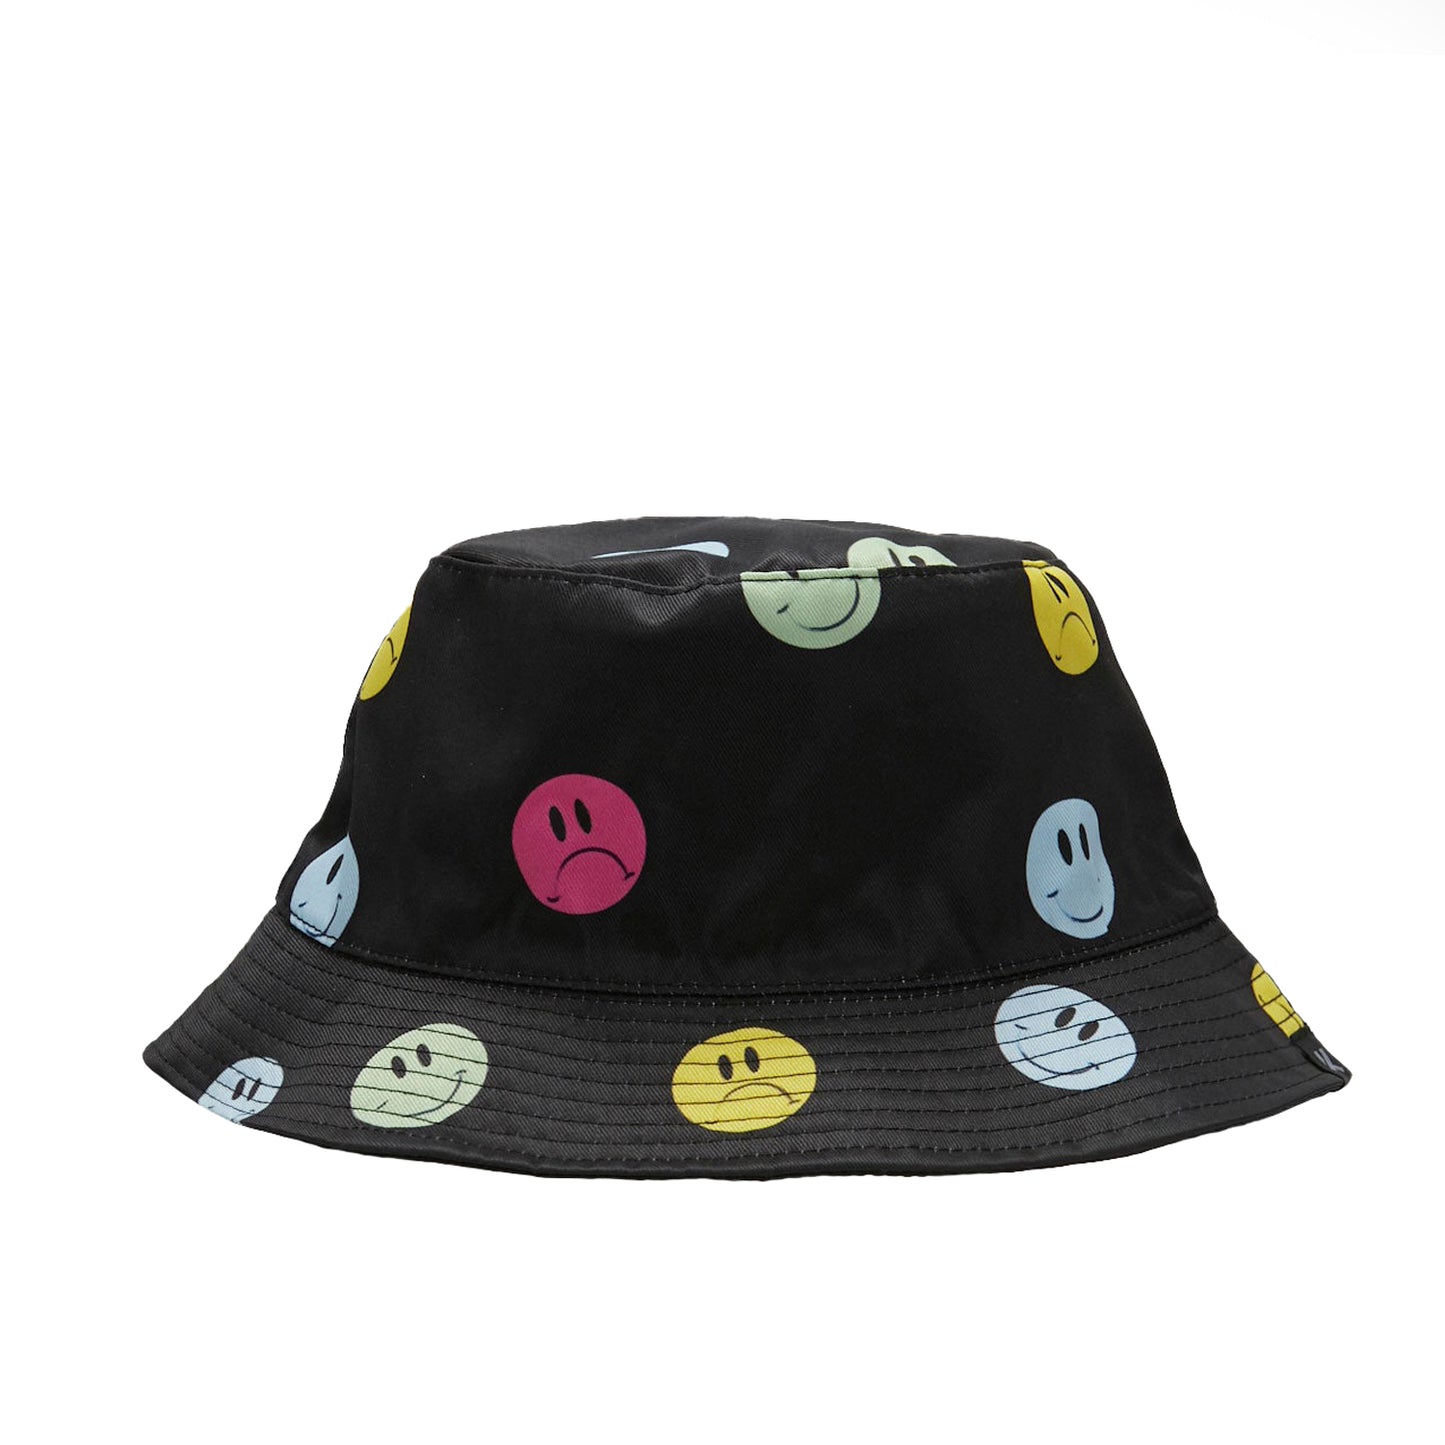 Mixed Emotions Black Bucket Hat - Accessories - KOI Footwear - Black - Main View